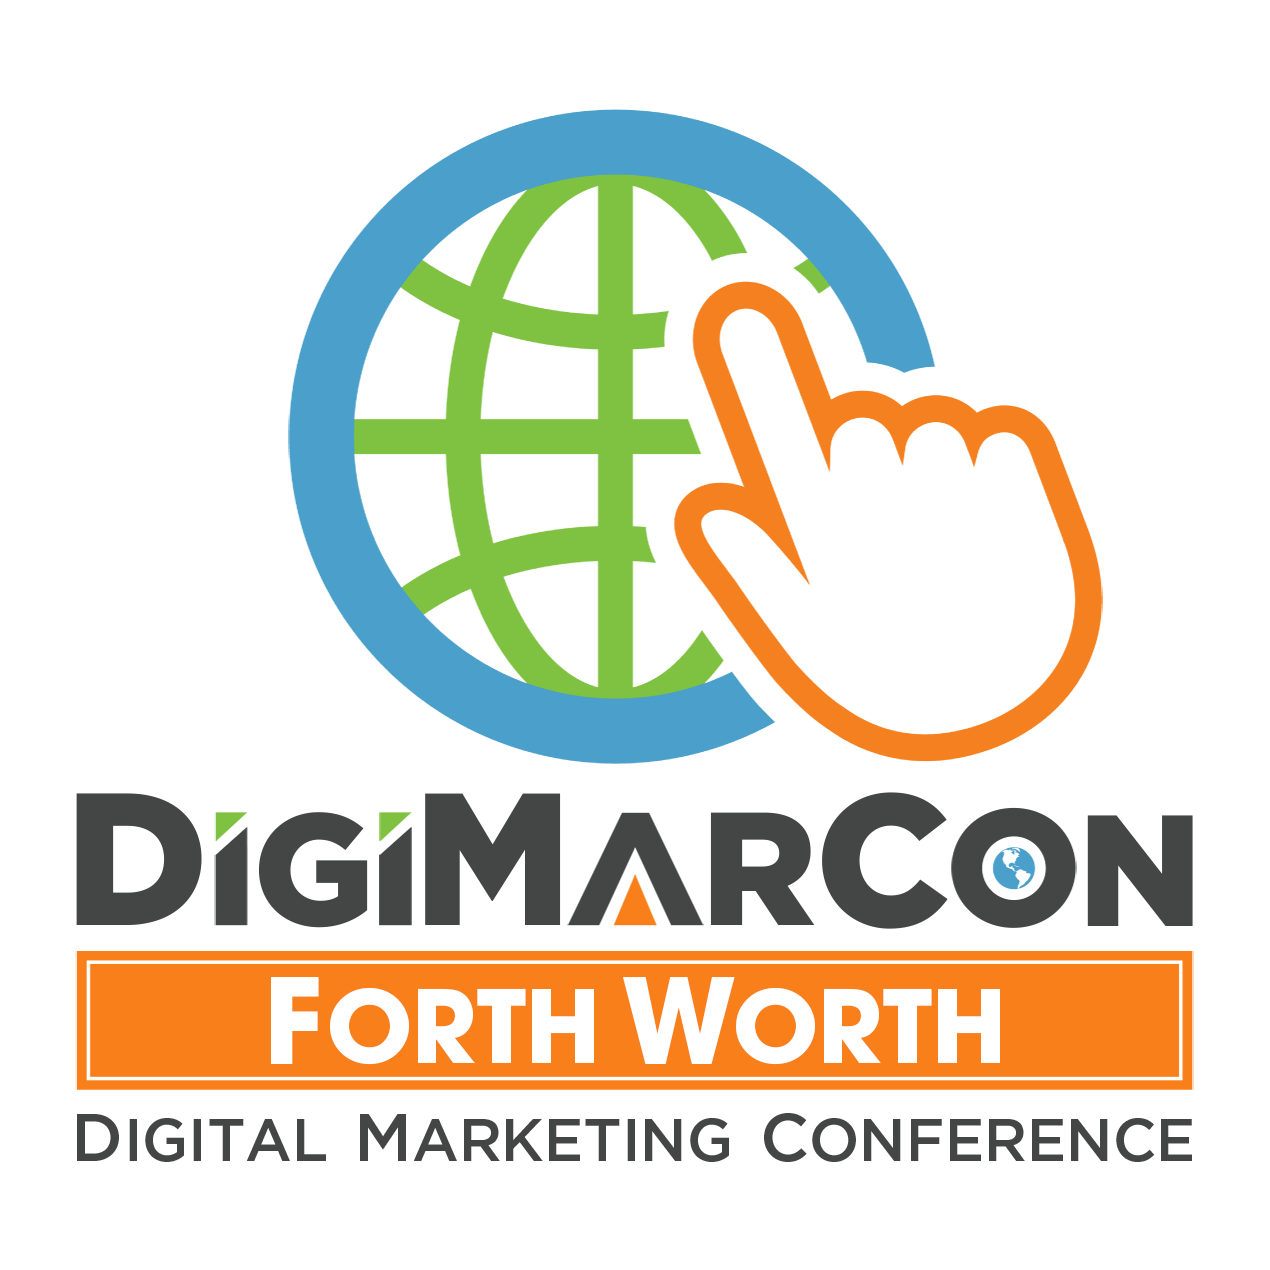 Oklahoma City Digital Marketing, Media & Advertising Conference